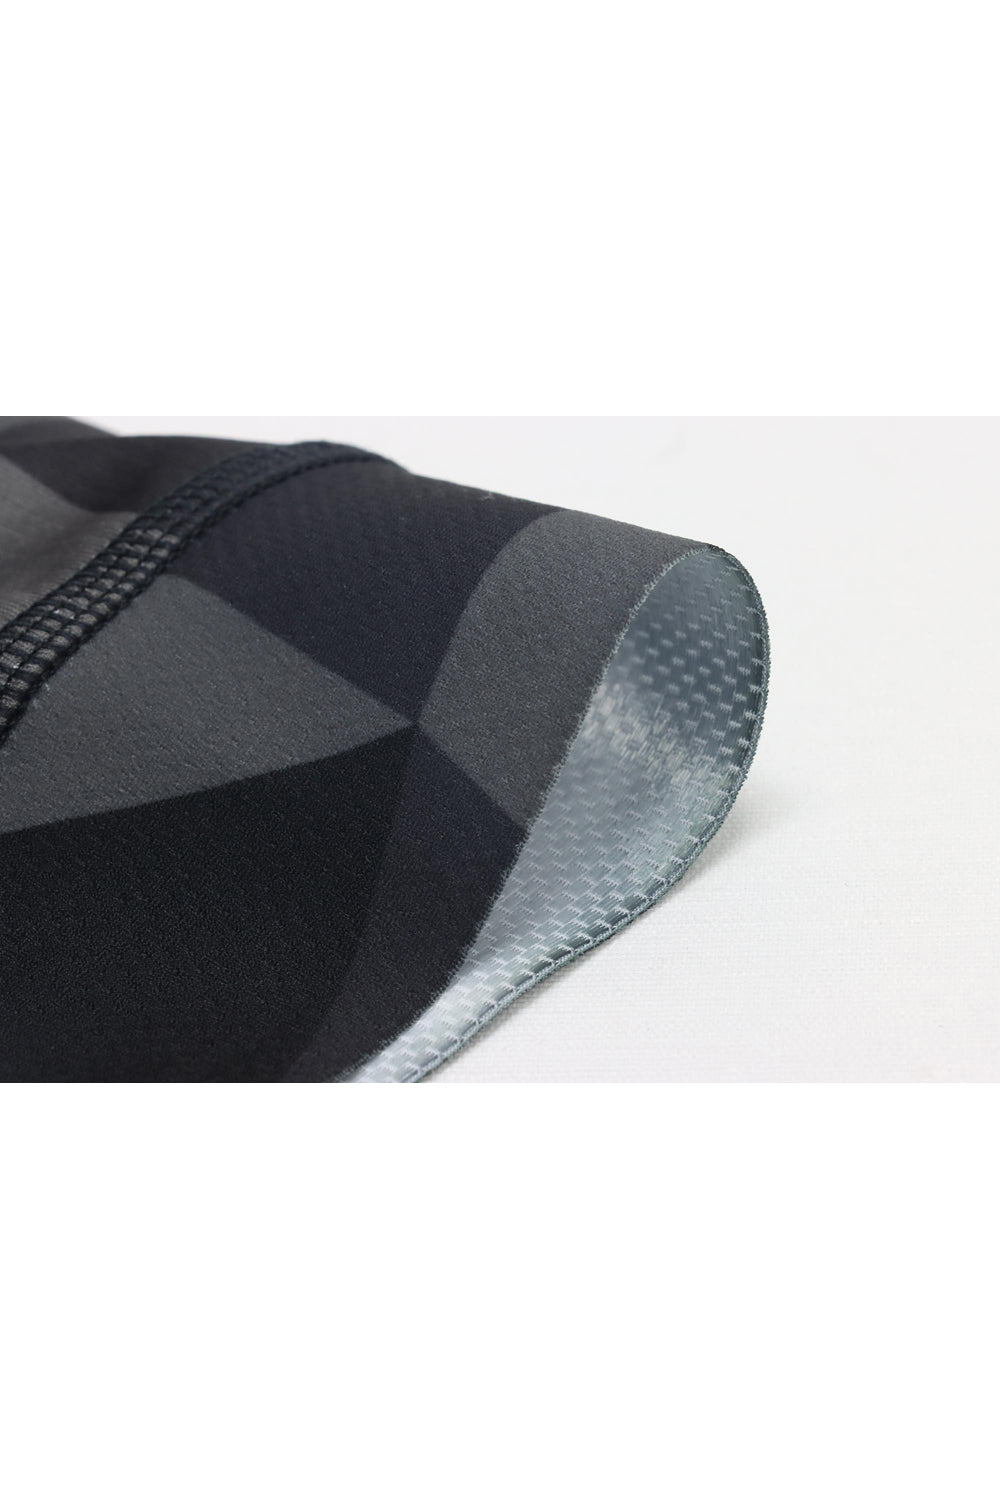 Sundried Geometric Men's Short Sleeve Training Cycle Jersey Short Sleeve Jersey Activewear